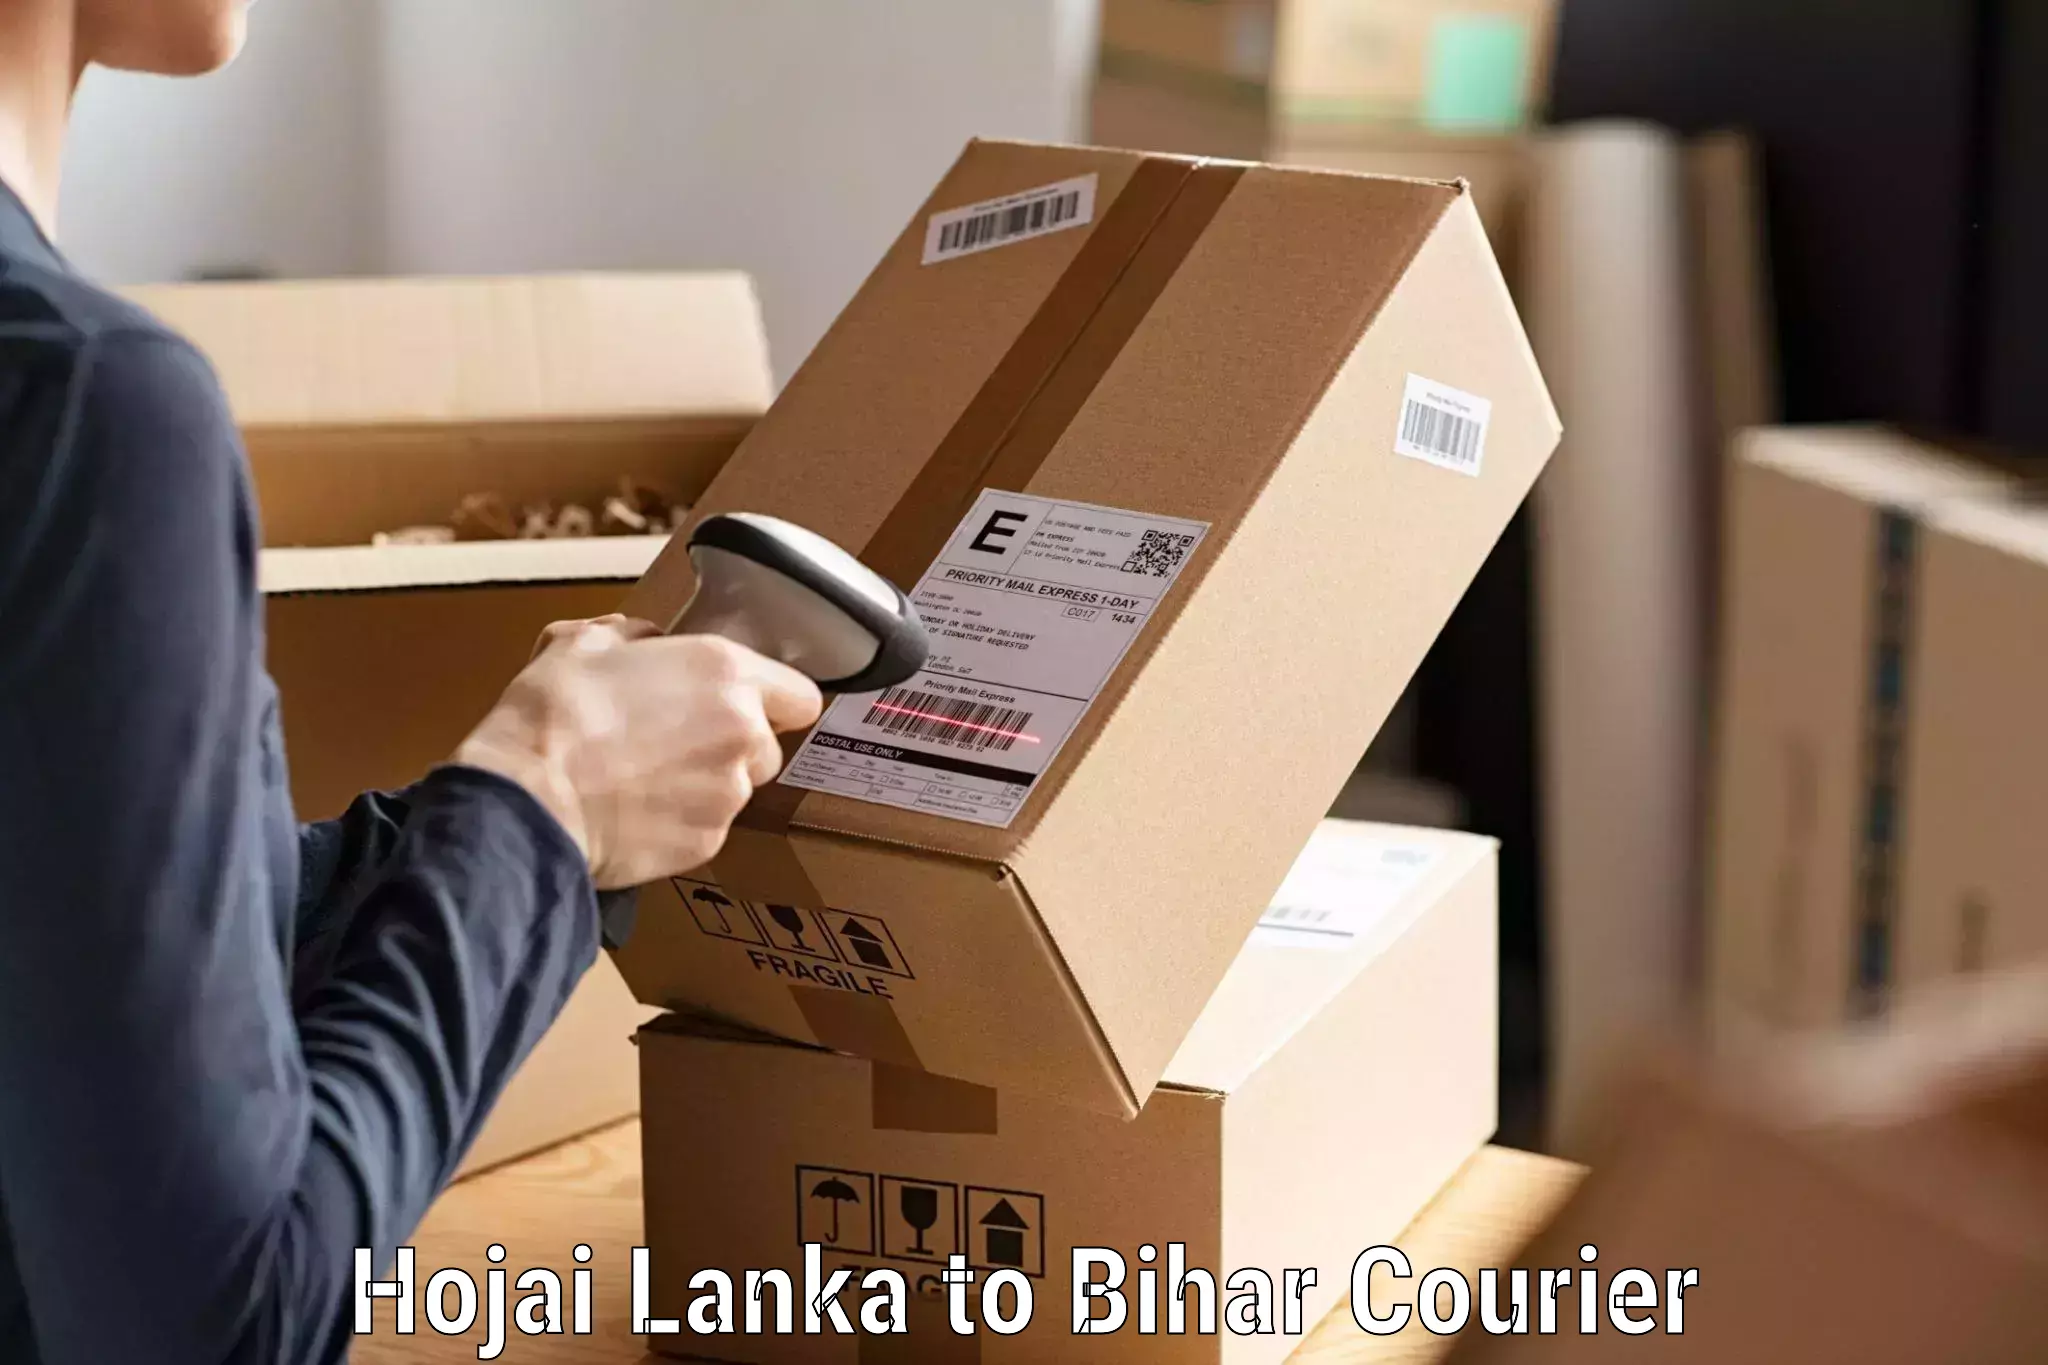 Express mail solutions Hojai Lanka to Nuaon